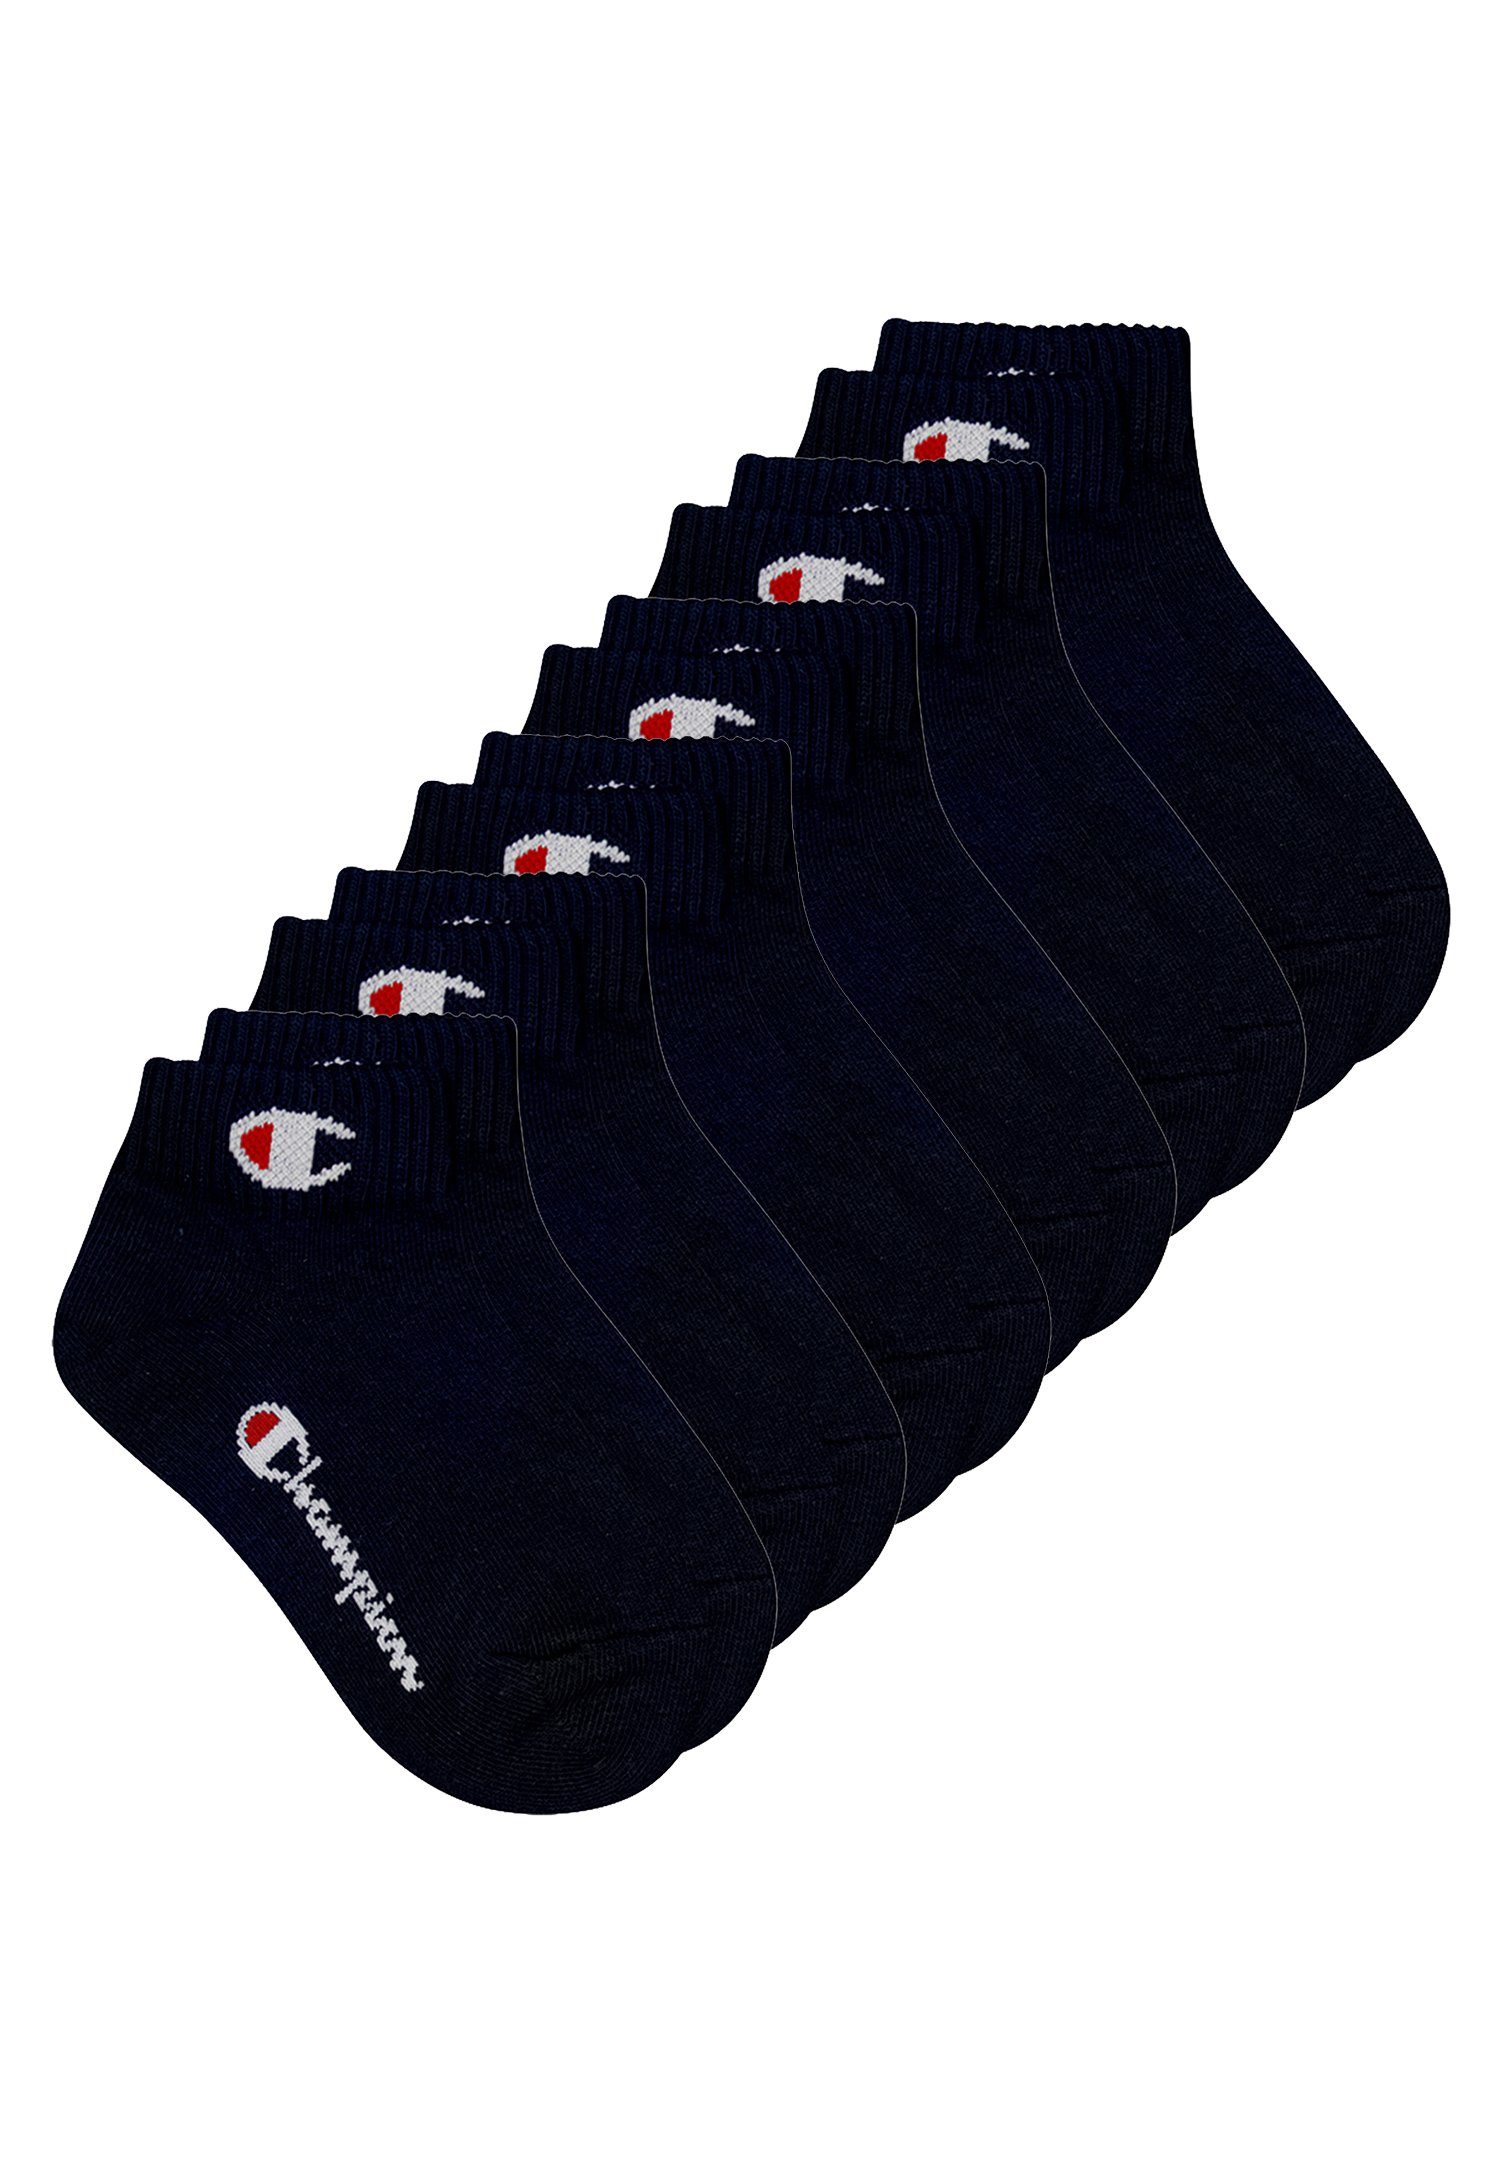 Socks 200 Kurzsocken black Quarter (6-Paar) Champion - 6pk